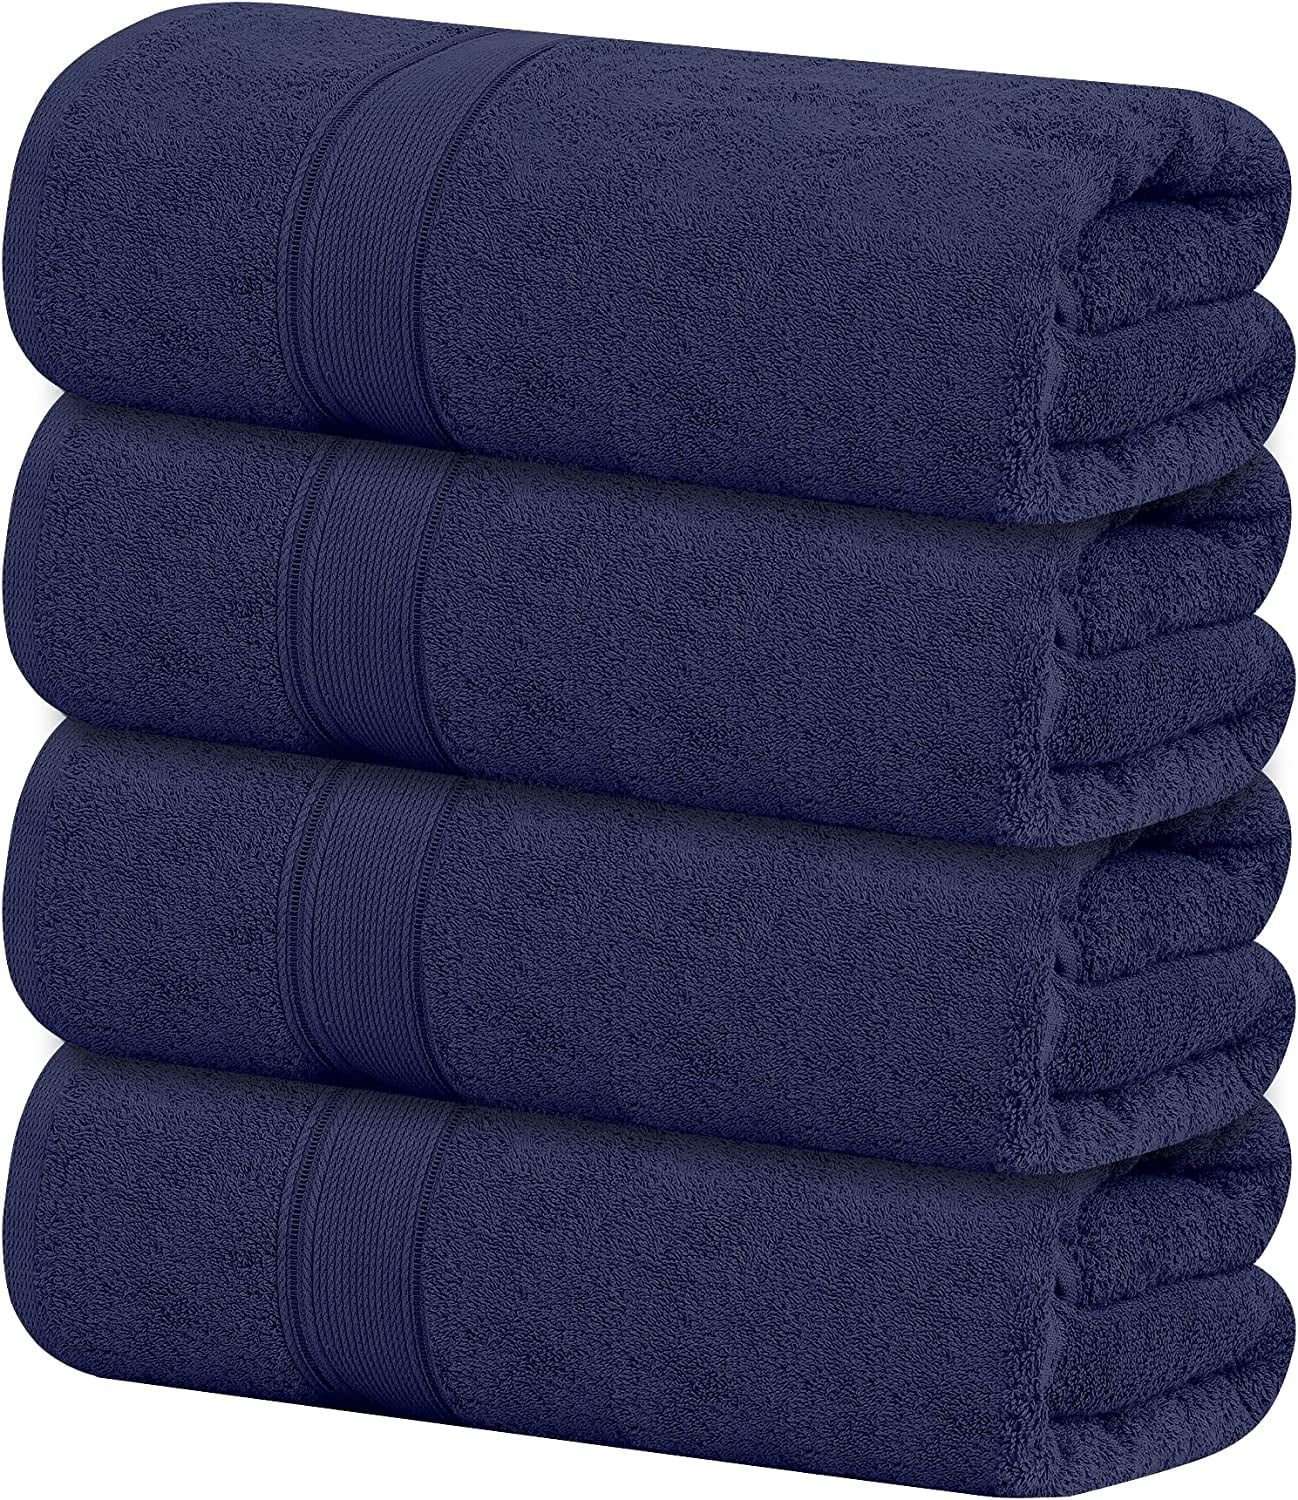 Tens Towels Brown 4 Piece XL Extra Large Bath Towels Set 30 x 60 inches  Premium Cotton Bathroom Towels Plush Quality 